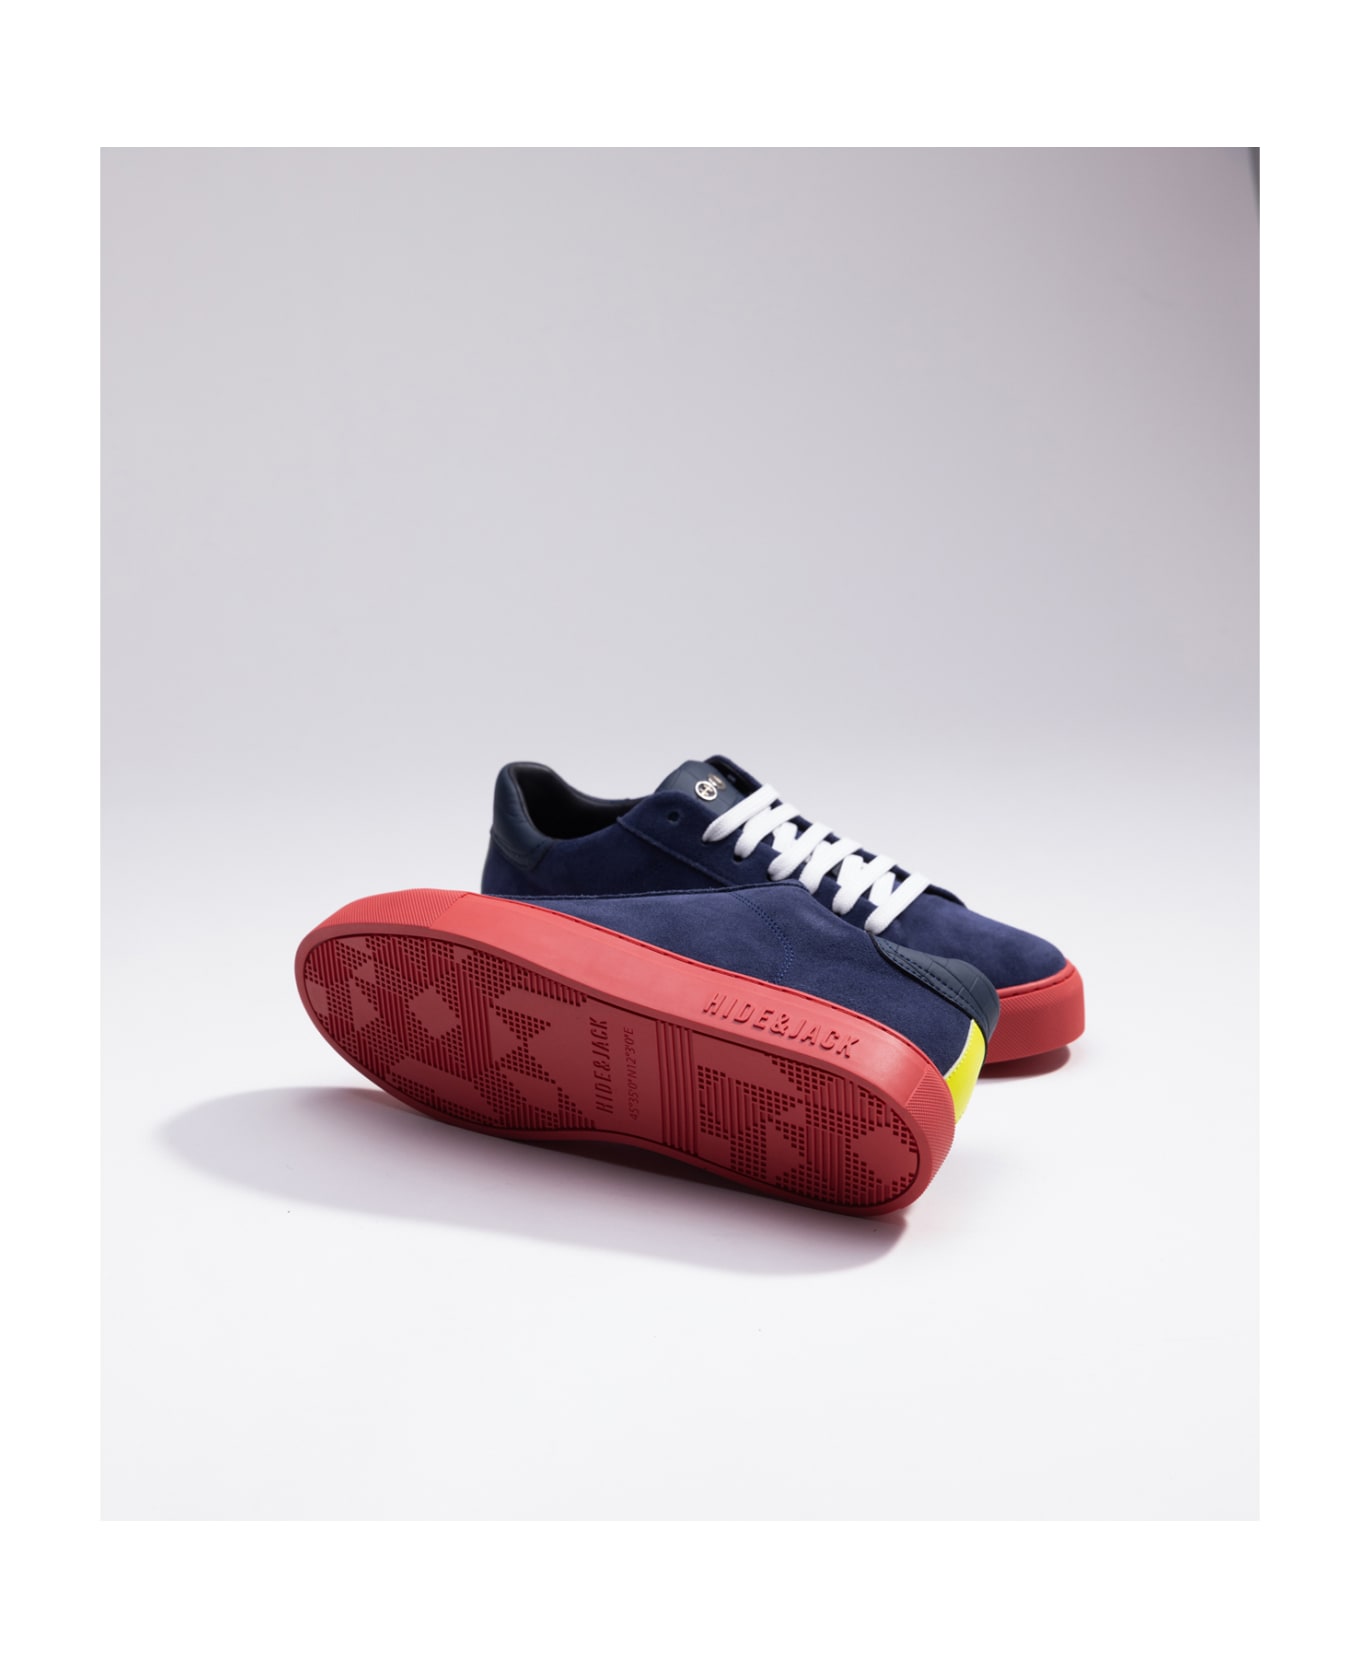 Hide&Jack Low Top Sneaker - Essence Oil Blue Red スニーカー